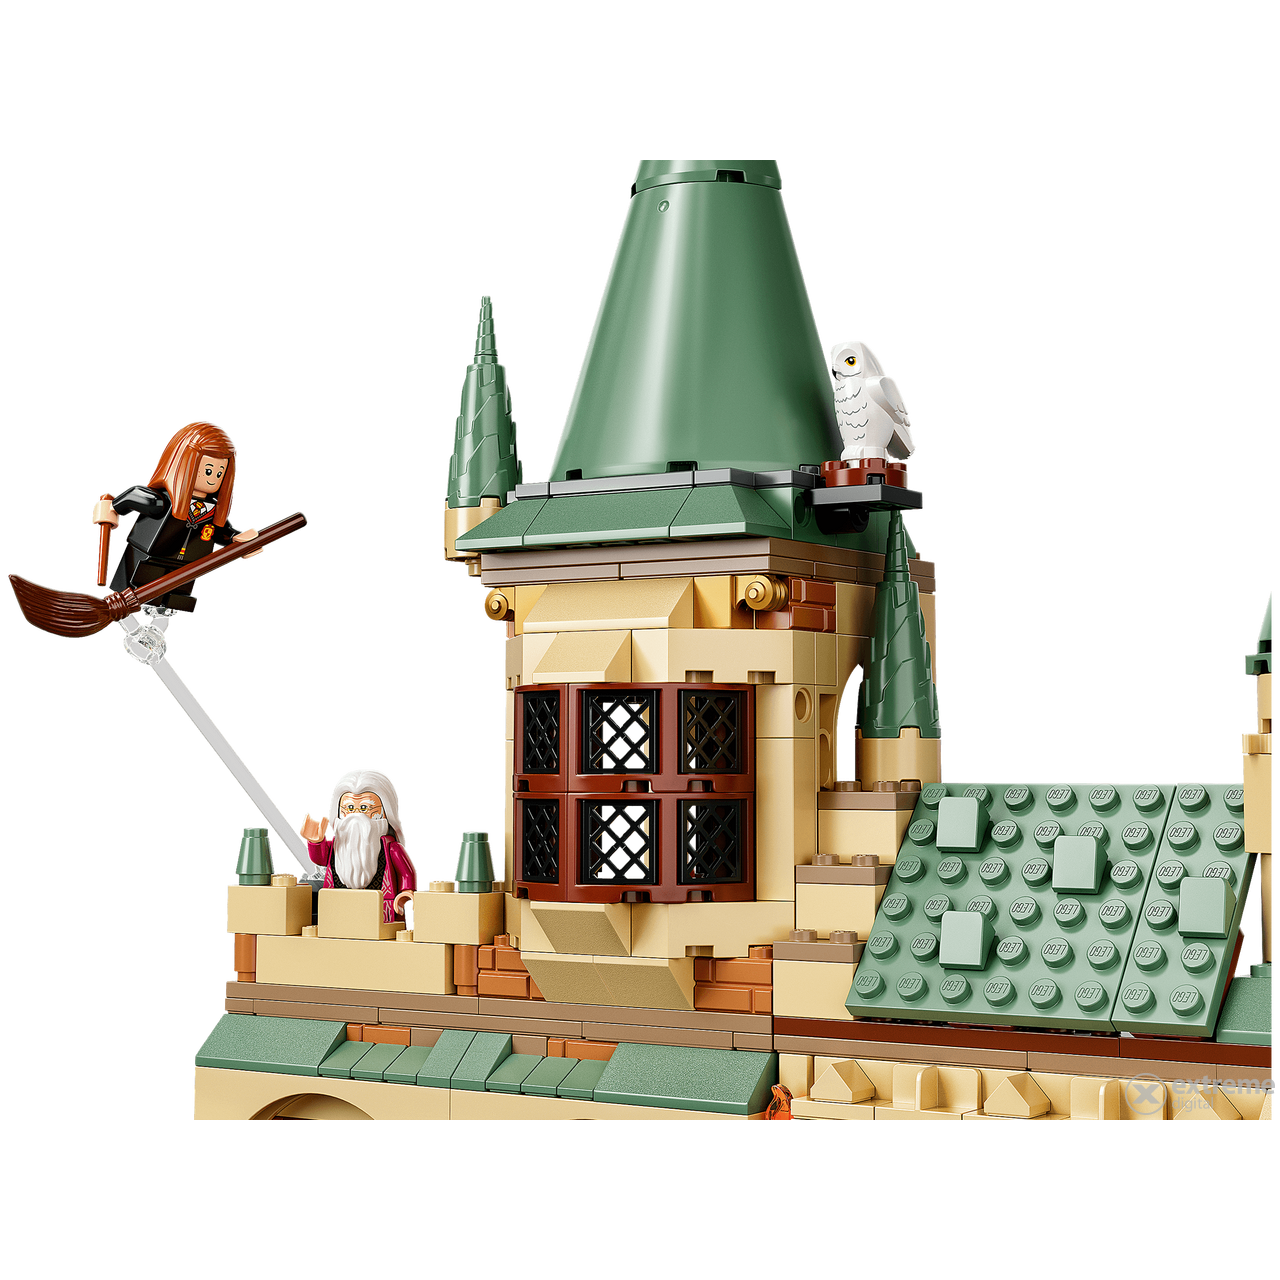 LEGO® Harry Potter 76389 Bradavice: Tajemná komnata